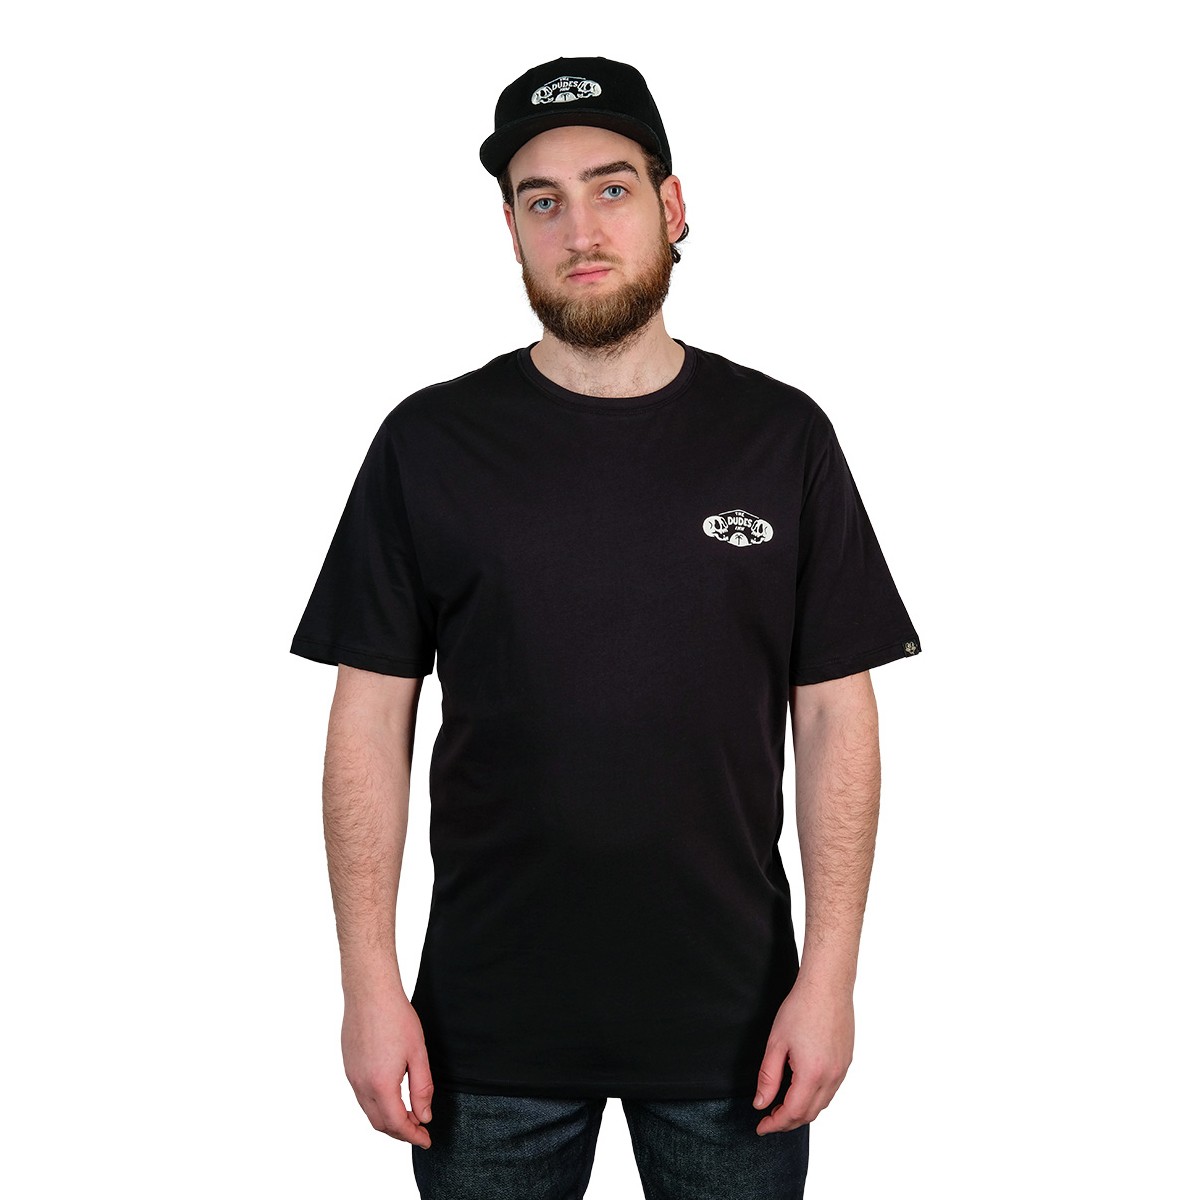 The Dudes Big Okay Black T-Shirt 1001414